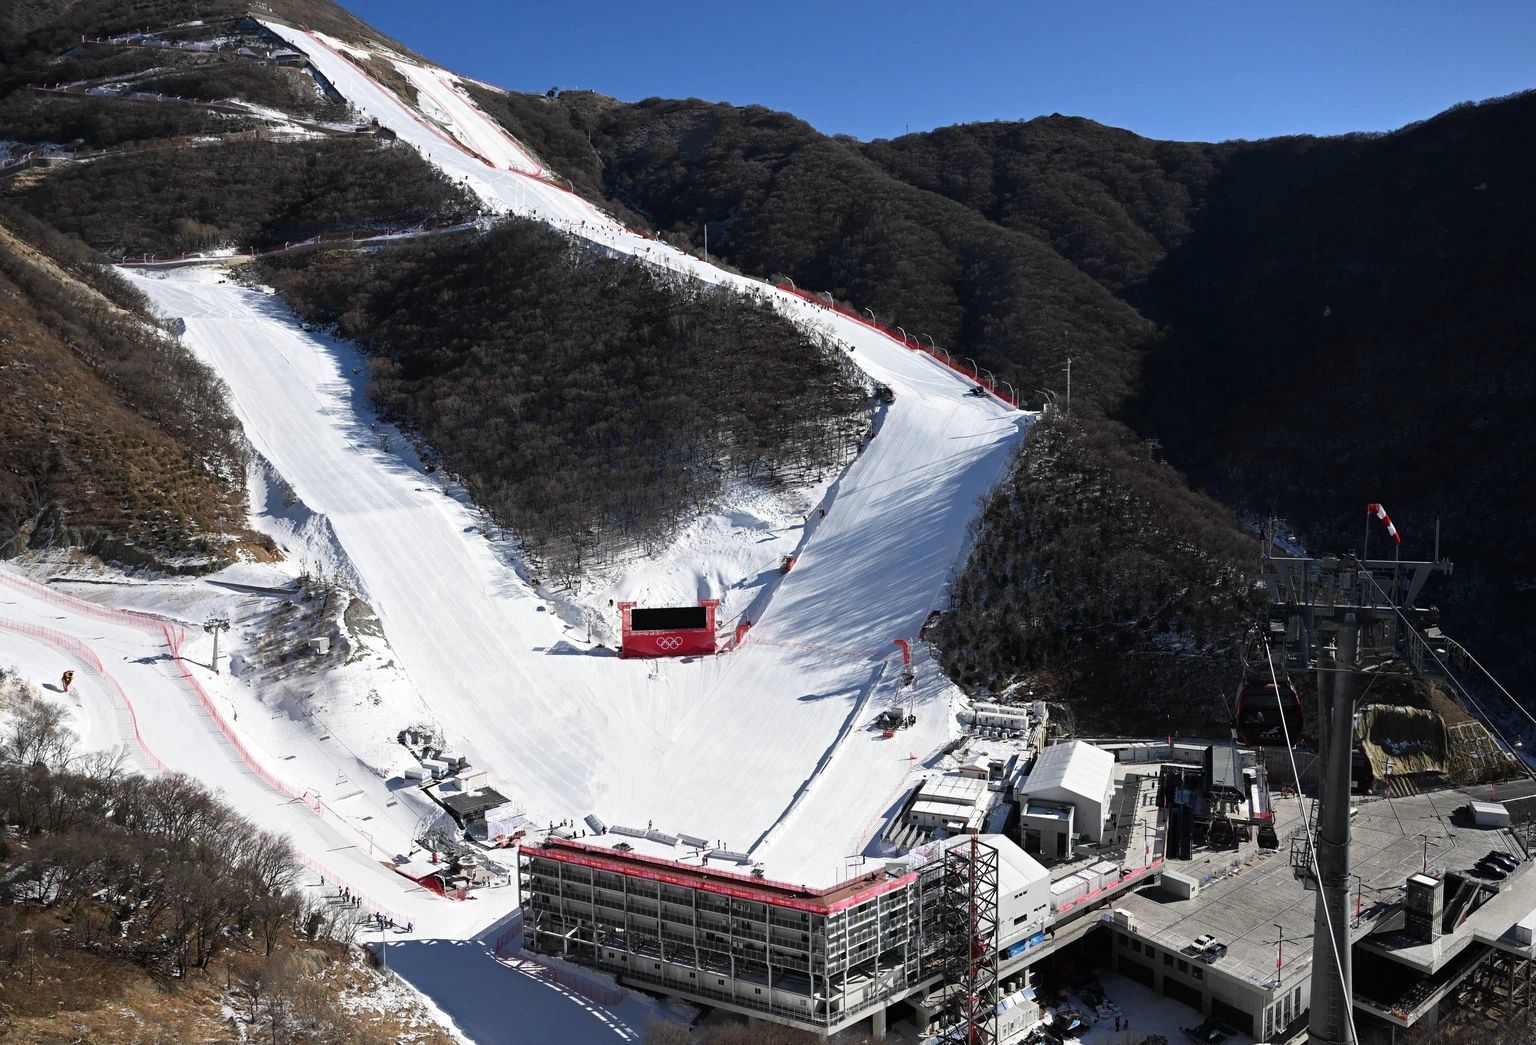 Pista de esquí olímpica de Pekin 2022